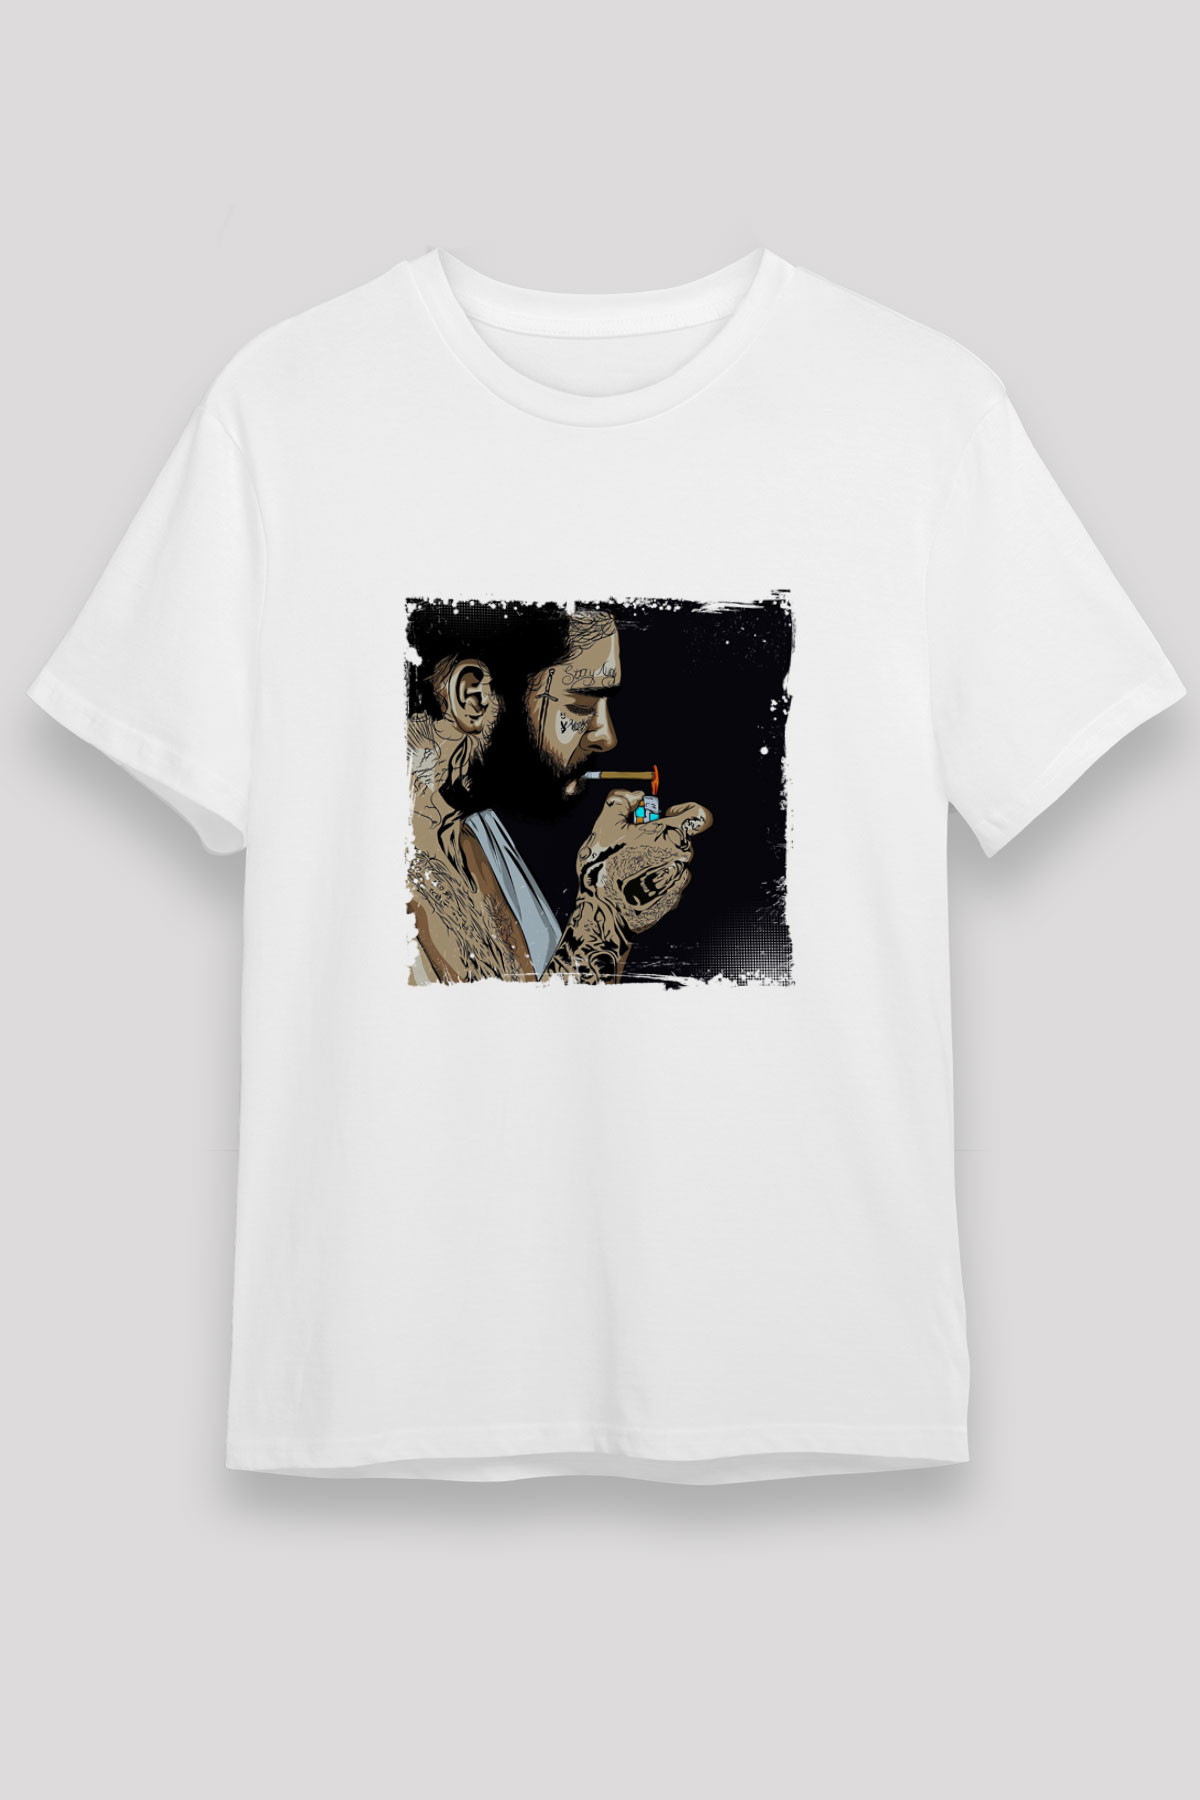 Post Malone T shirt,Hip Hop,Rap Tshirt 08